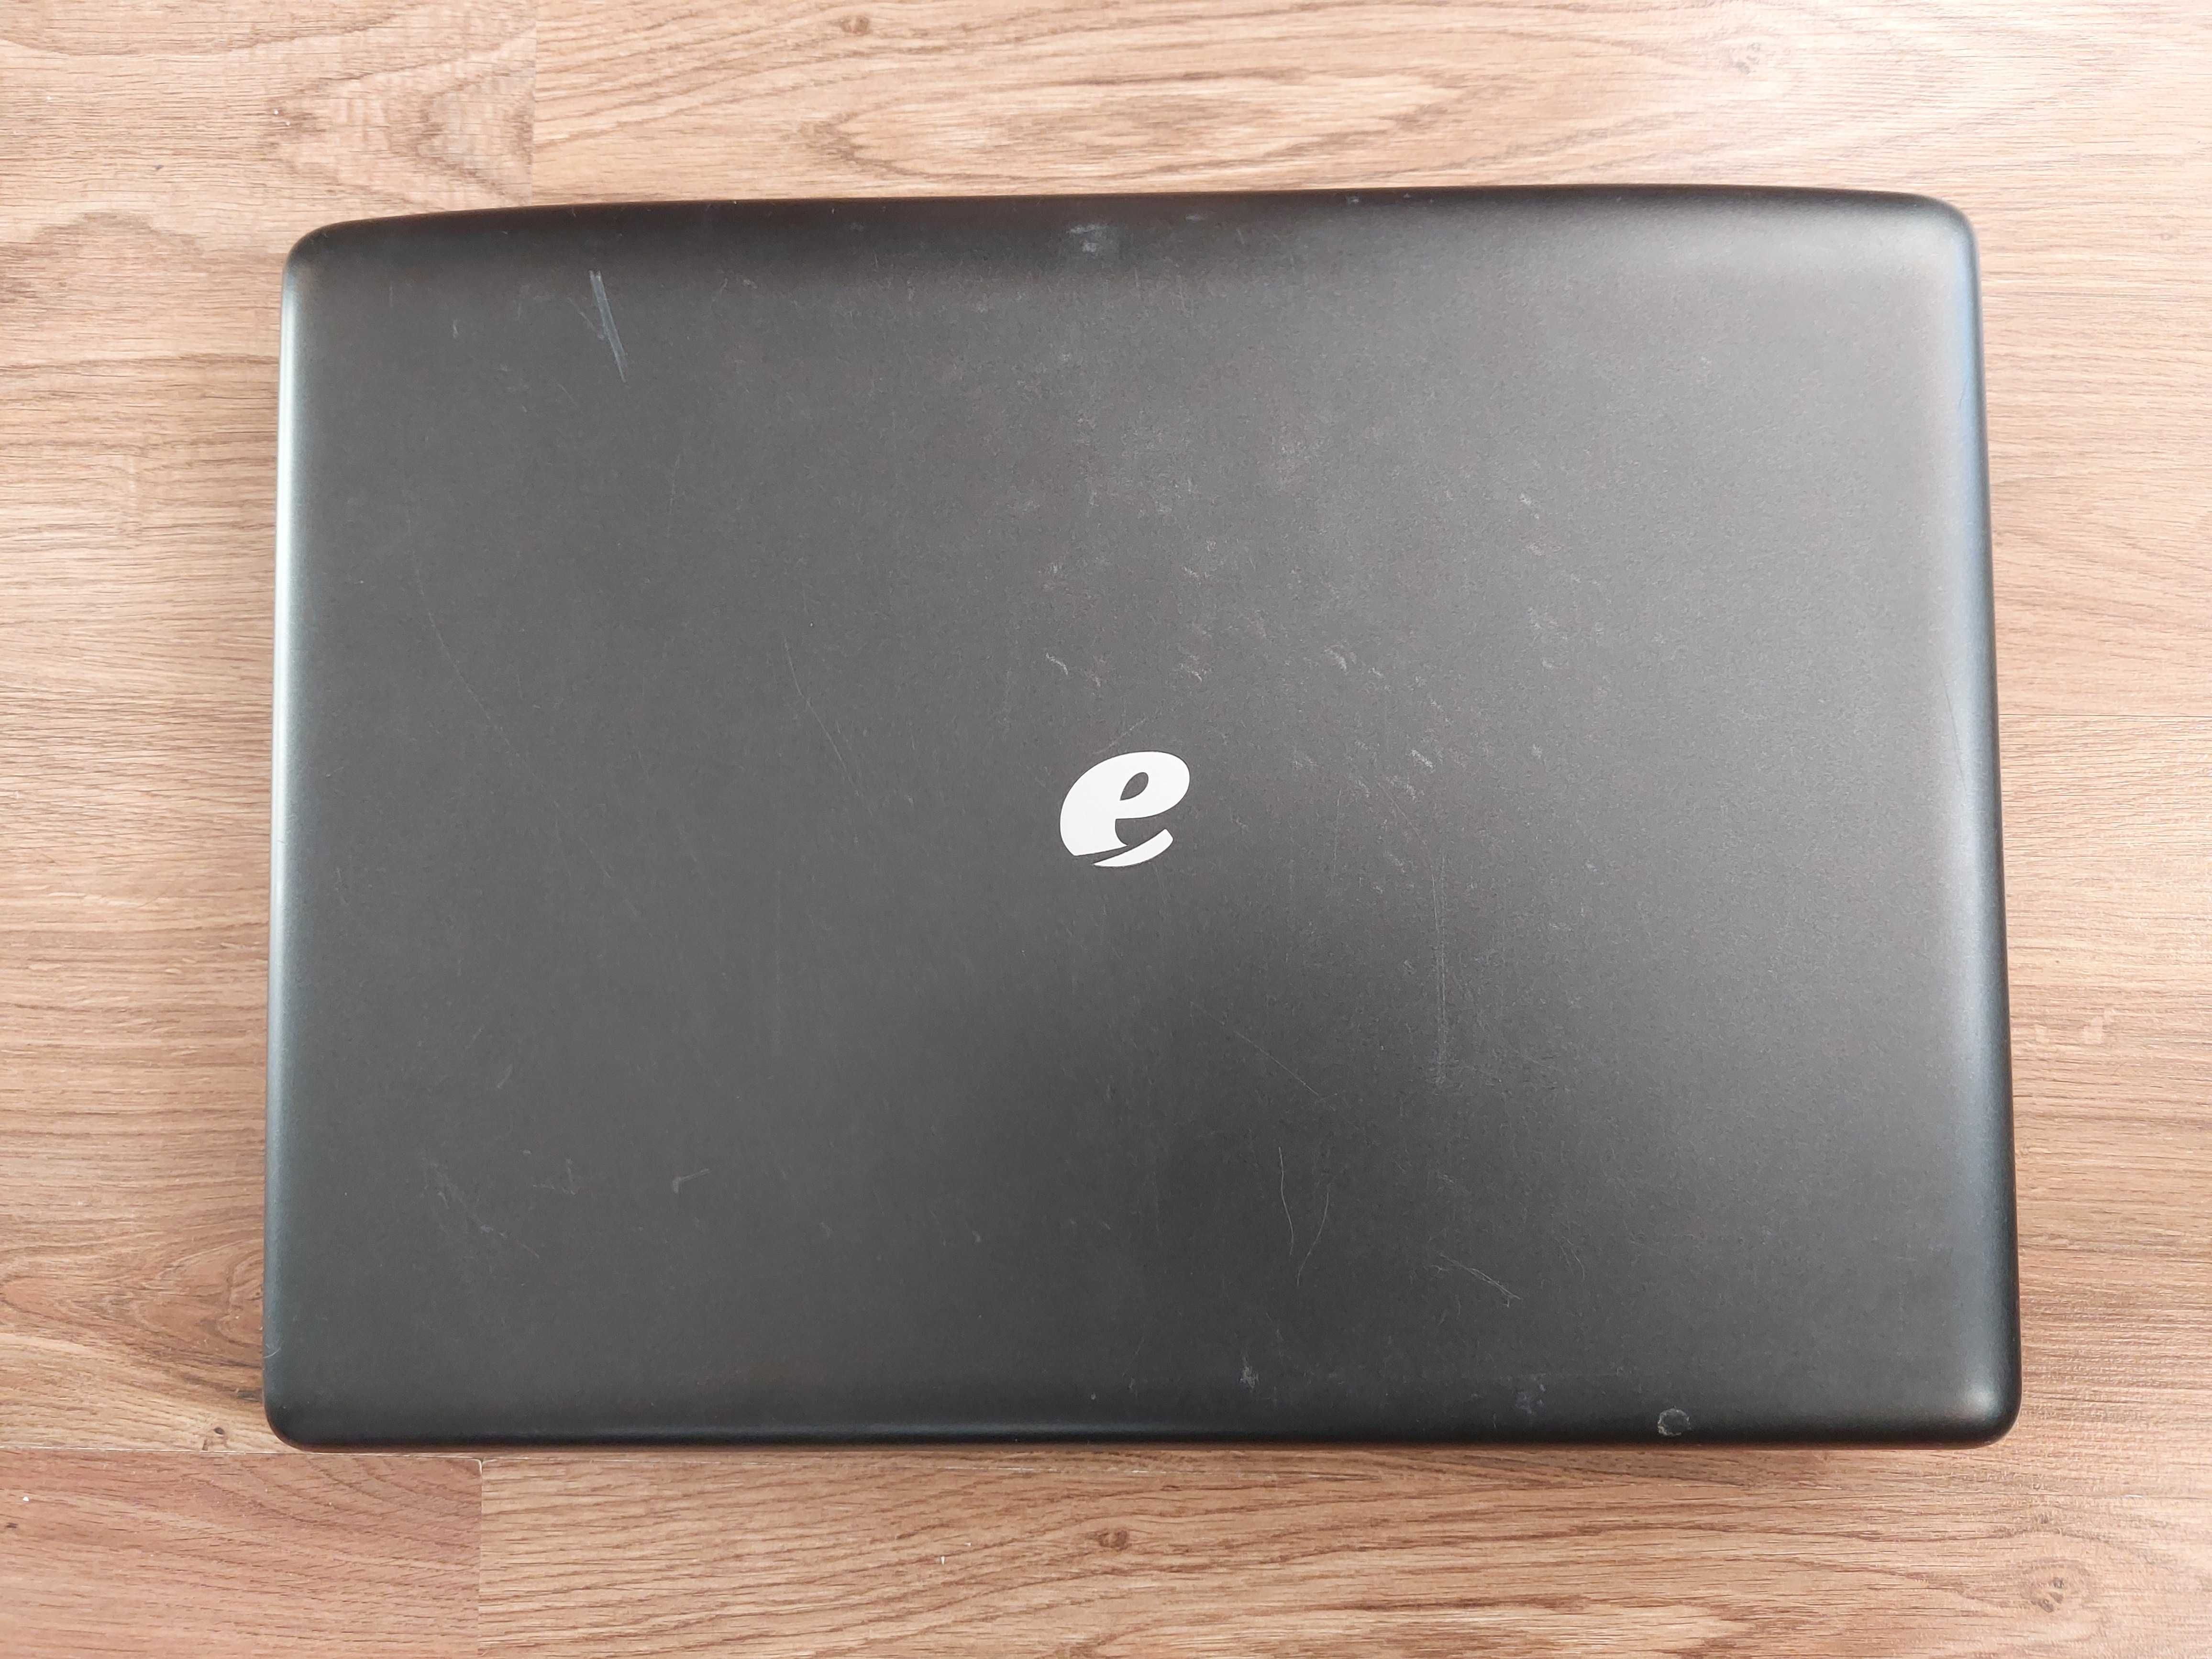 Laptop eMachines G720,Hdd500gb,Core2 Duo x2 2gb,Ram3gb,Gwarancja